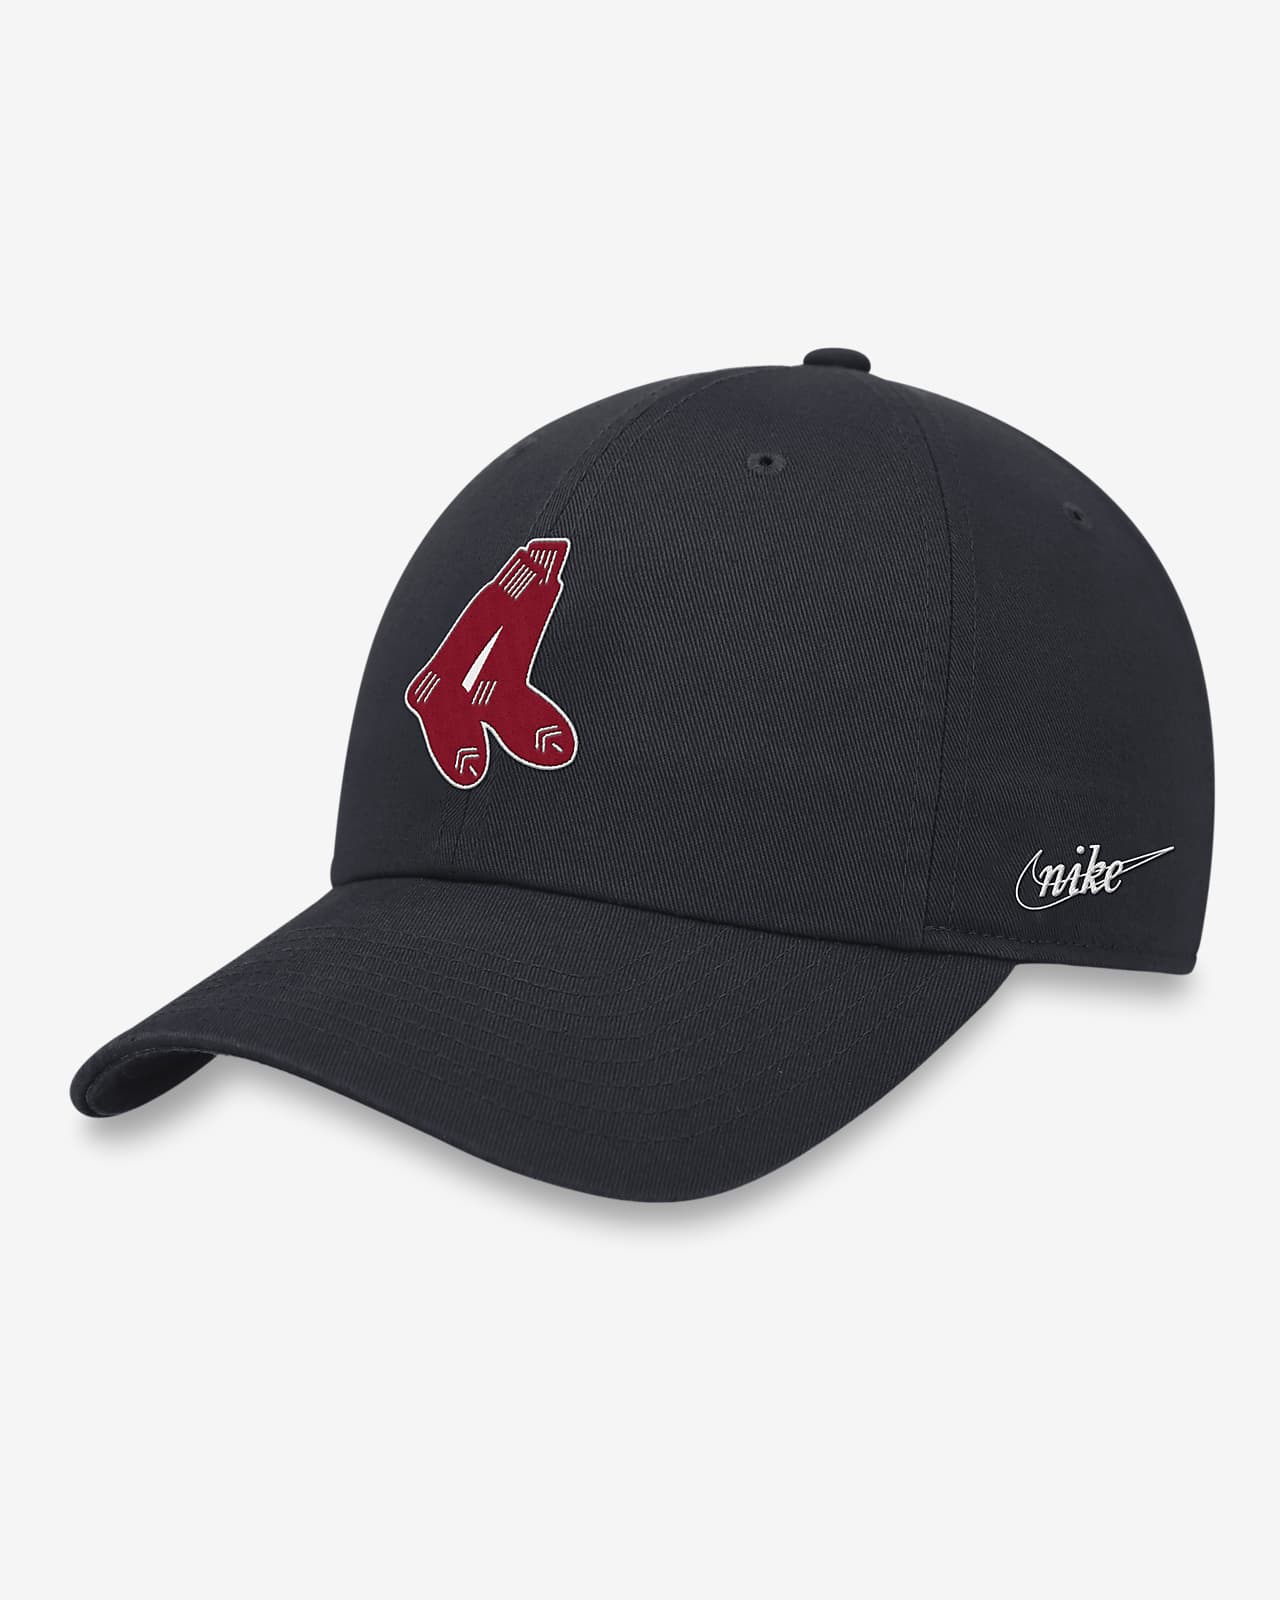 Men's St. Louis Cardinals Black '47 All-Star Adjustable Hat